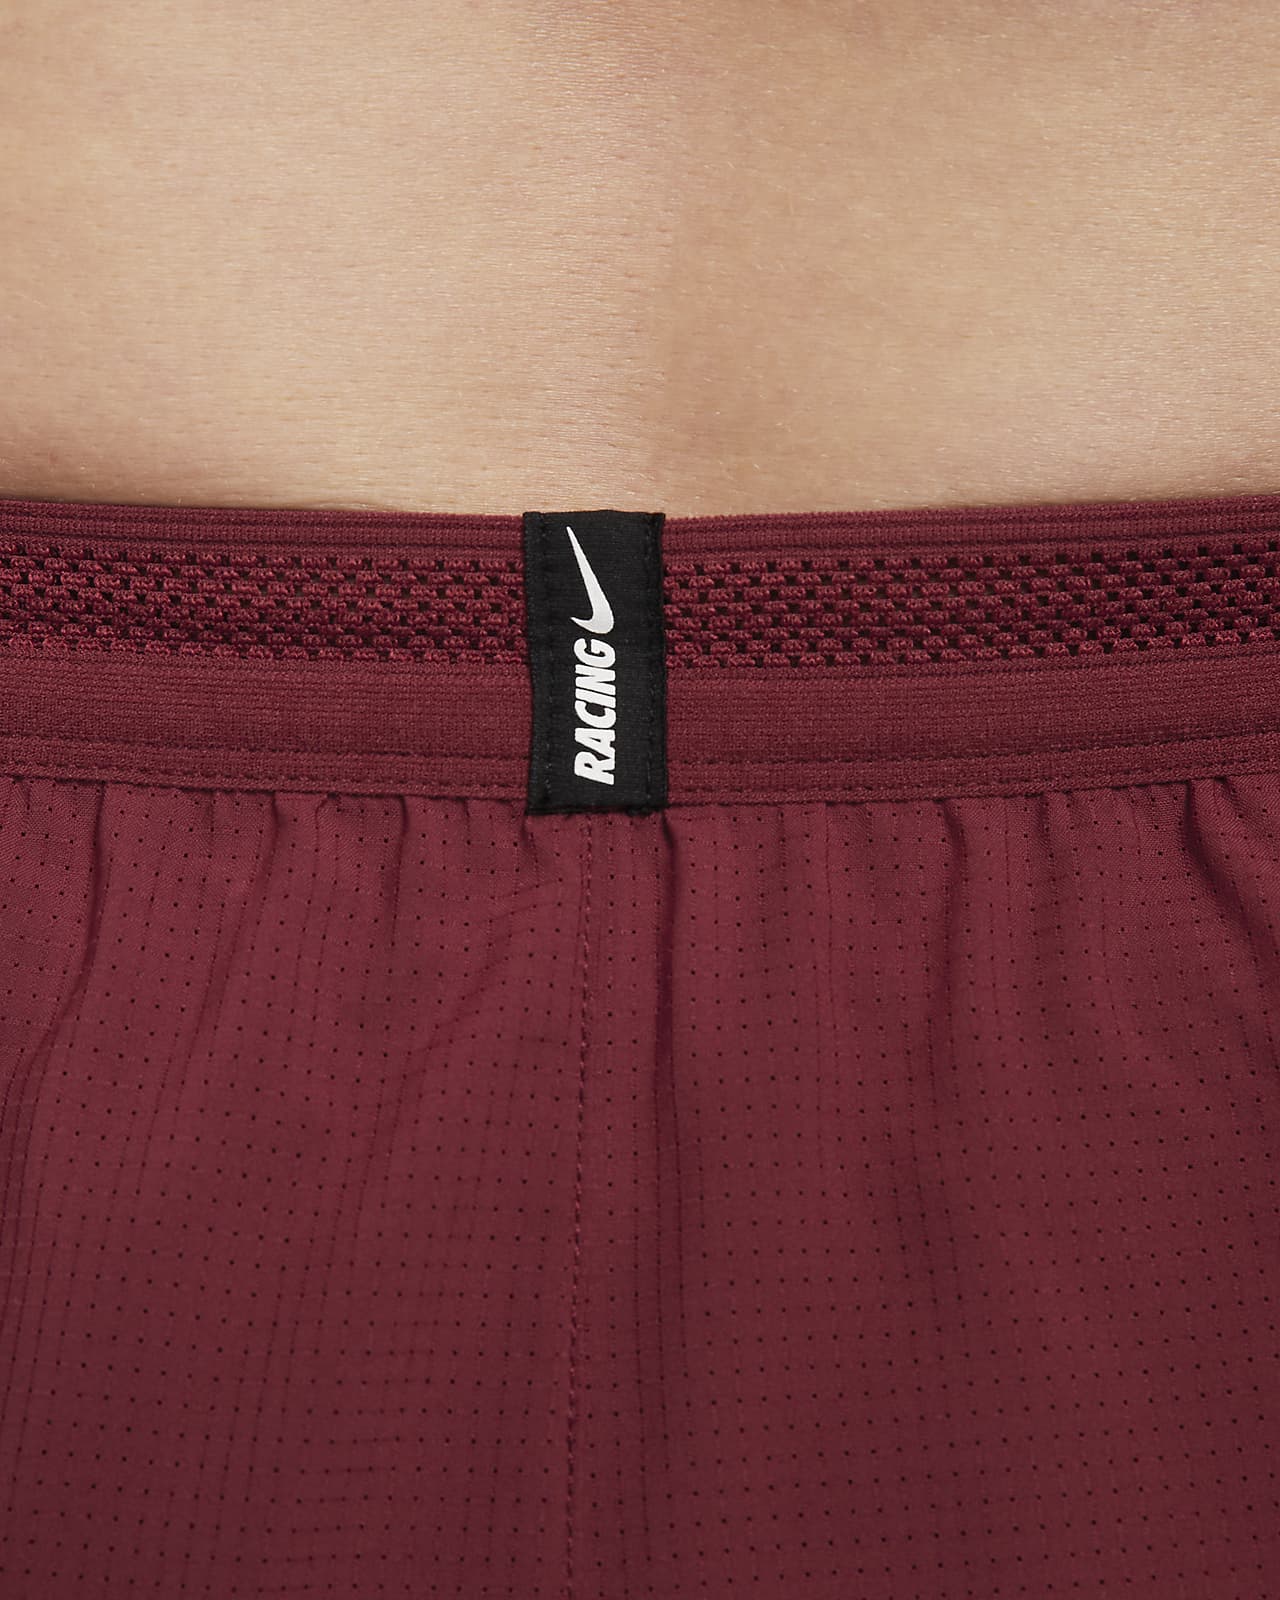 Verenigde Staten van Amerika passend Wees Nike AeroSwift Men's 5cm (approx.) Brief-Lined Racing Shorts. Nike LU